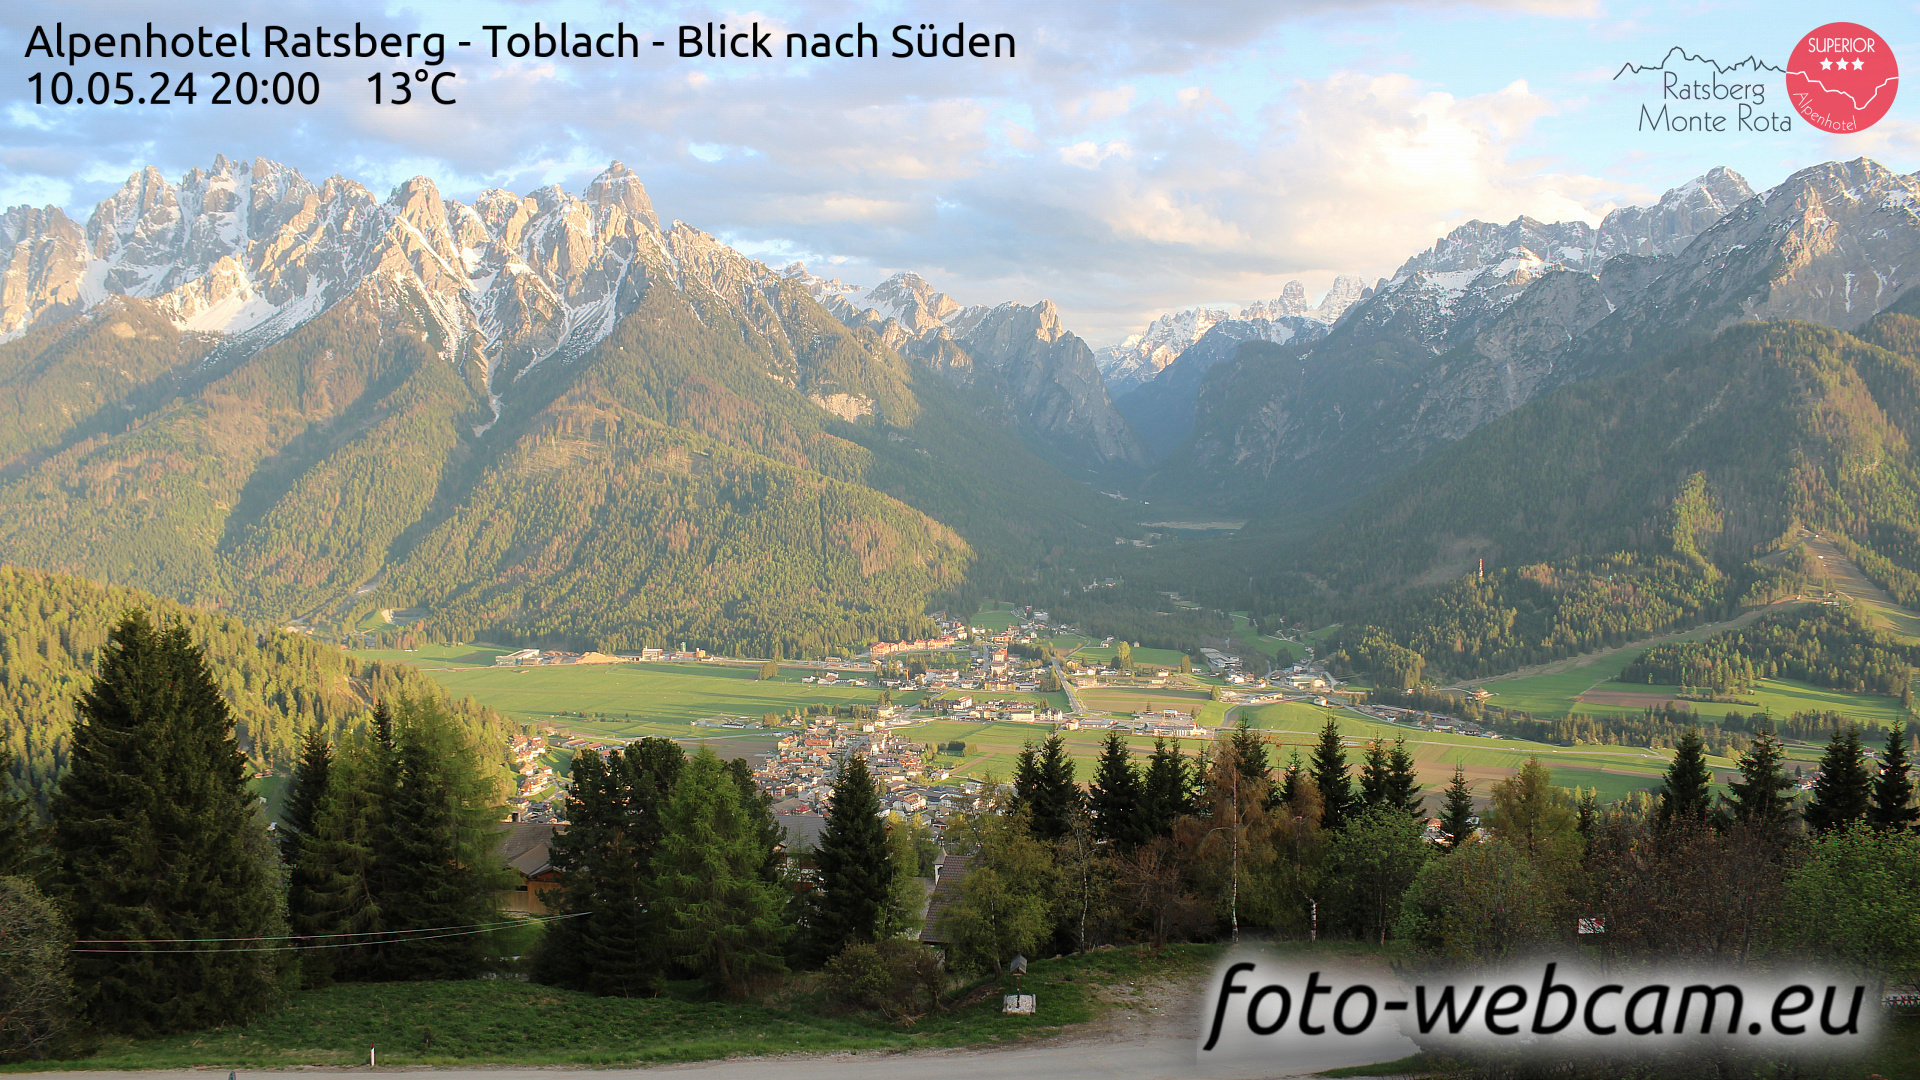 Toblach (Dolomites) Thu. 20:03